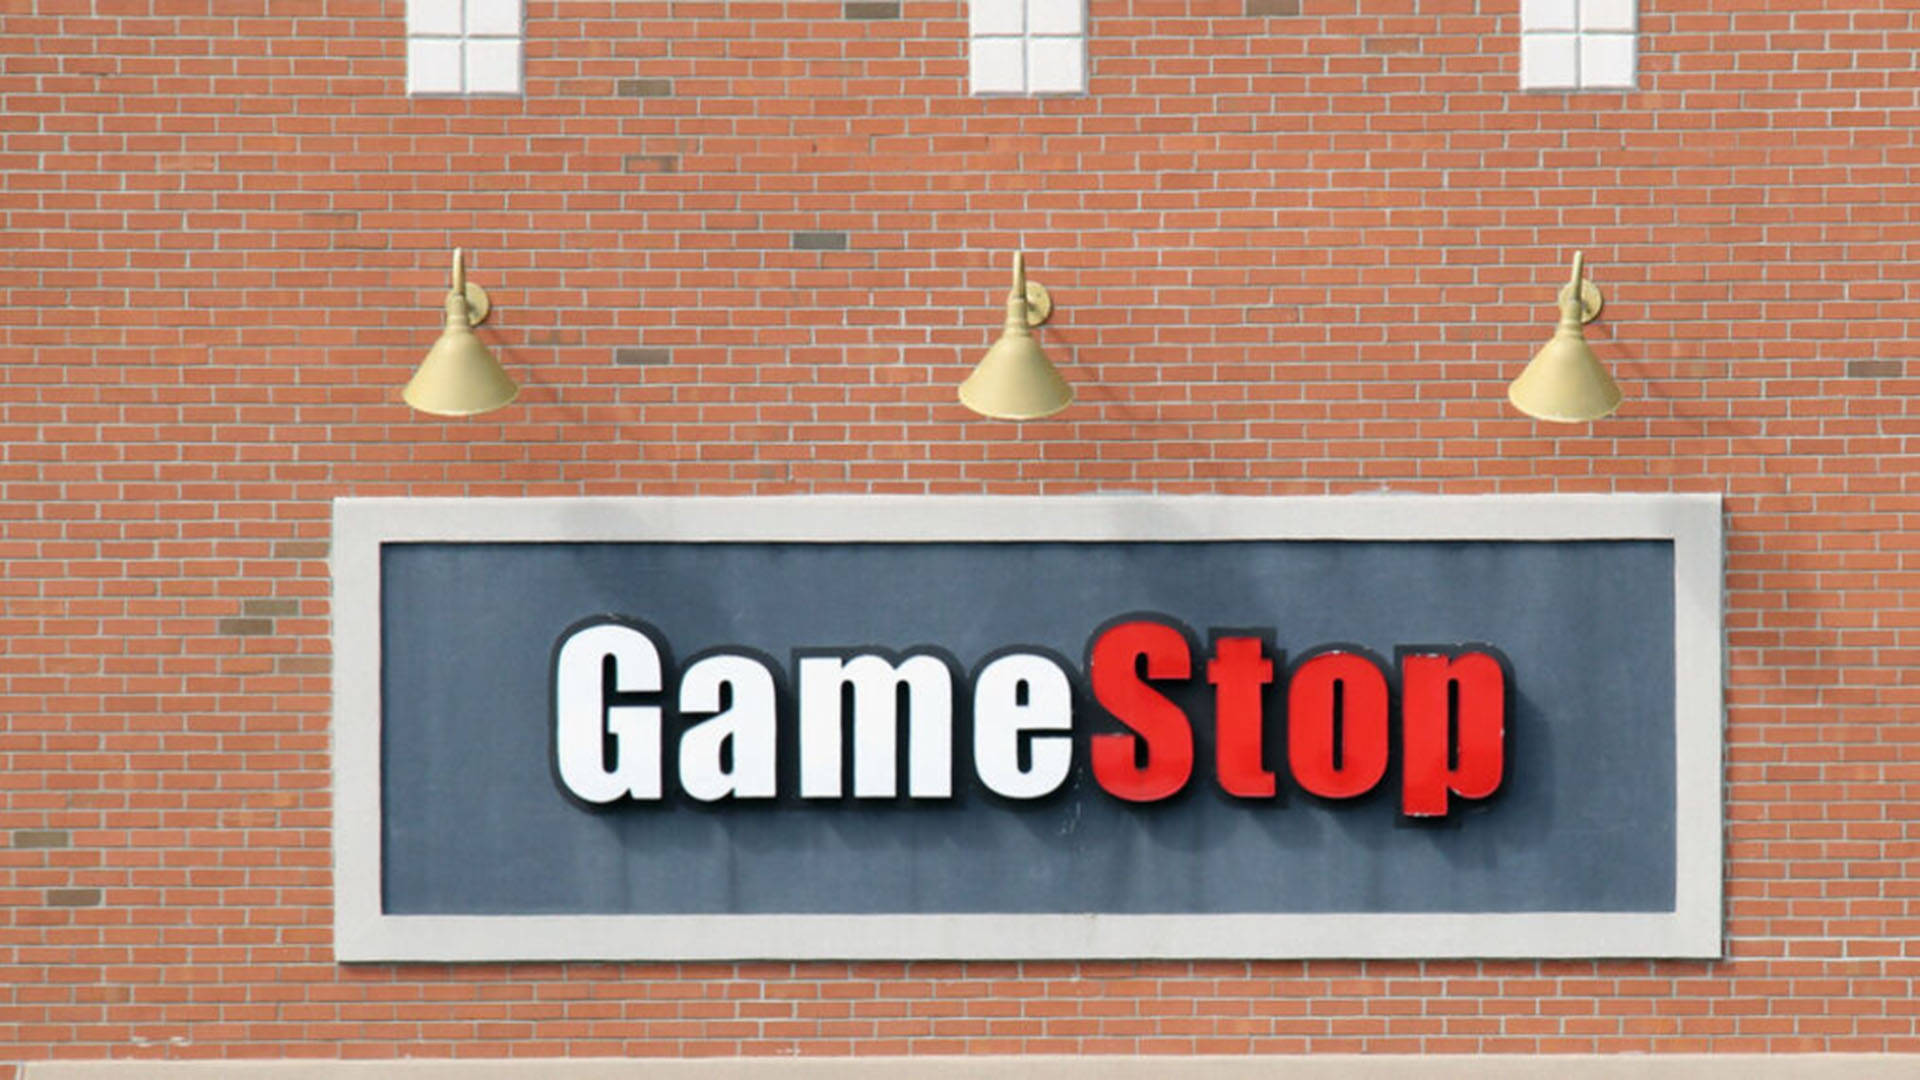 GameStop Orange Brick Wall Sign Background